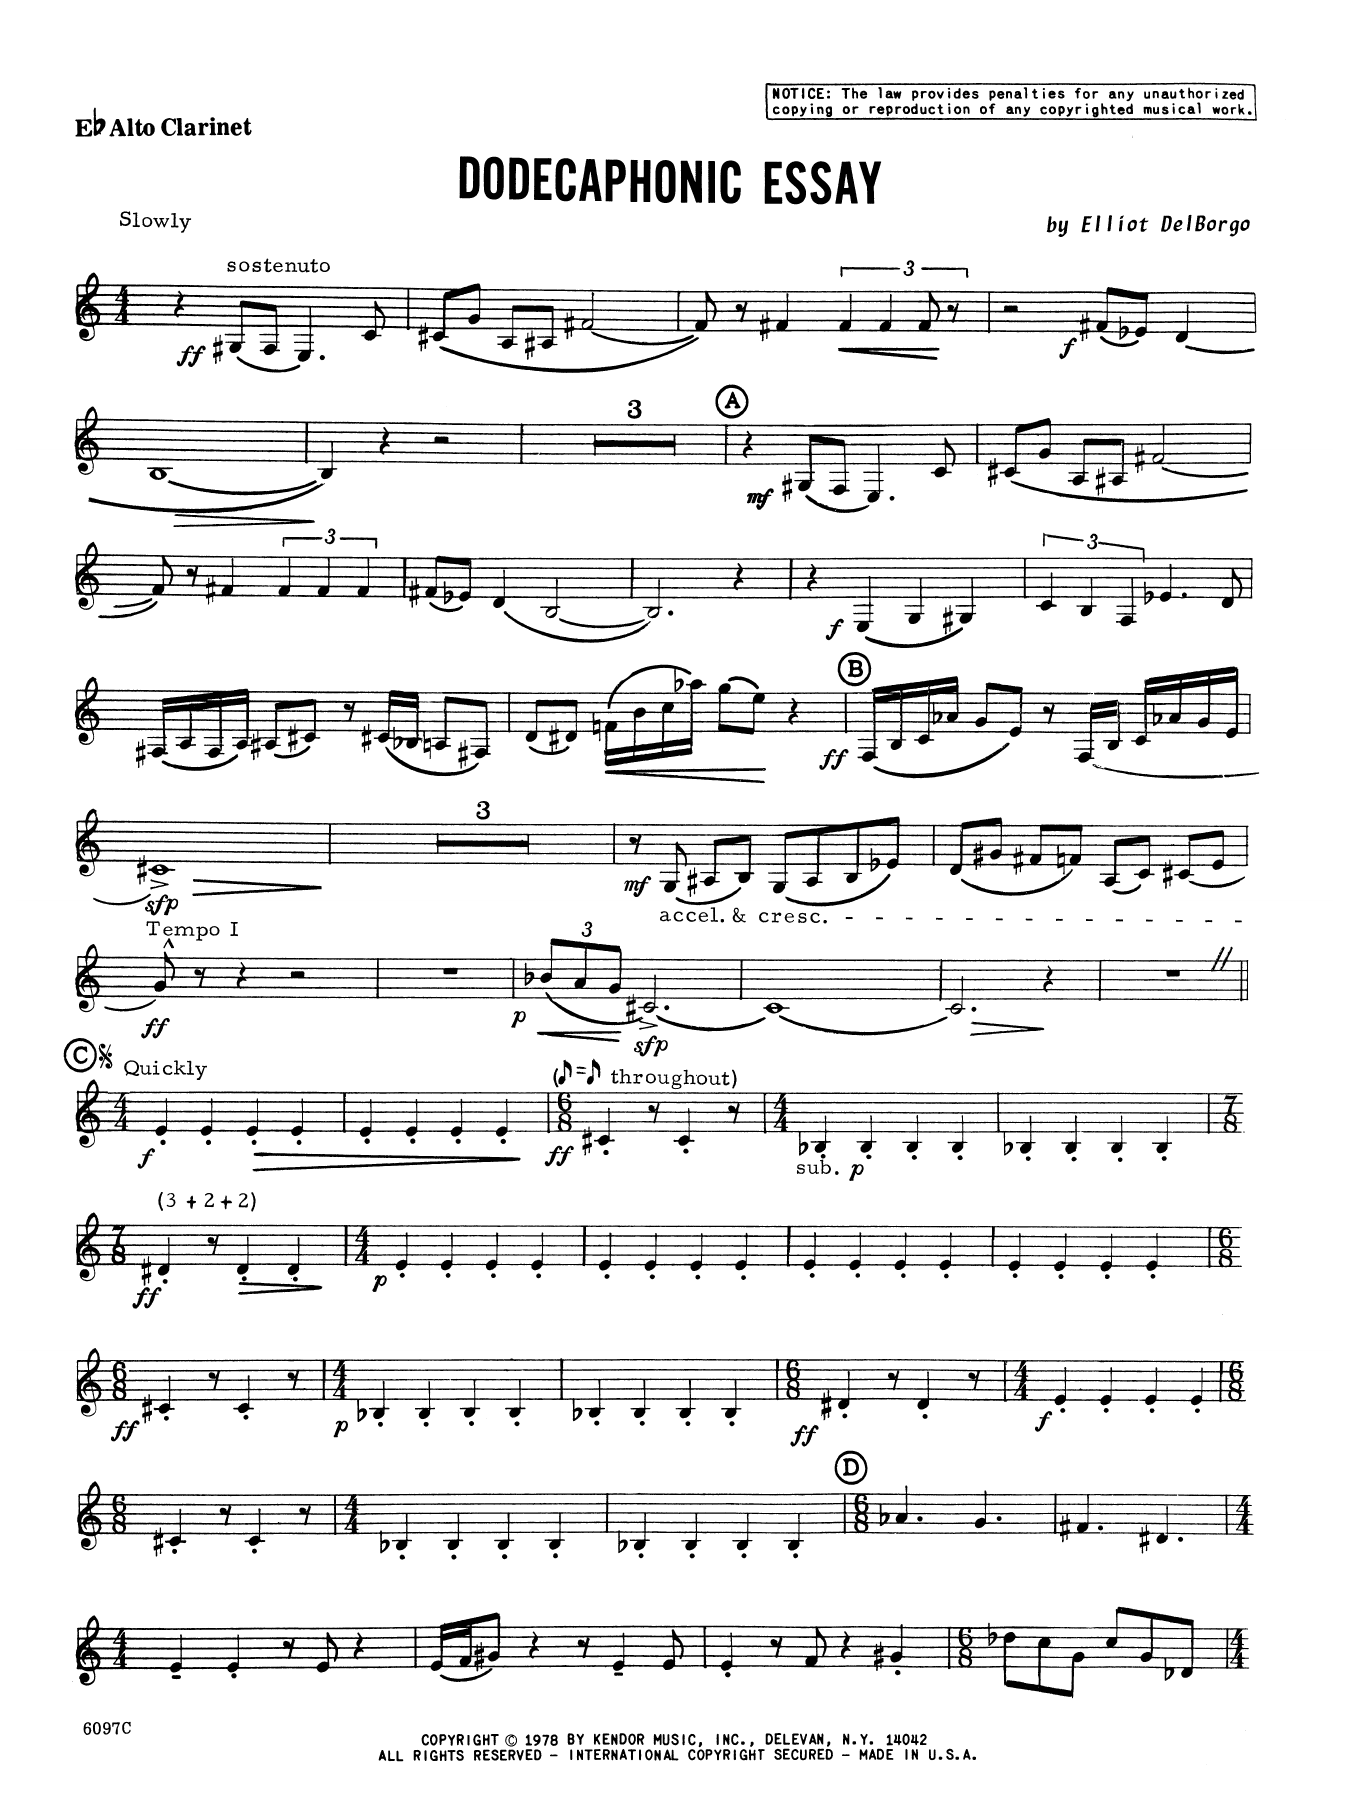 Download Elliot A. Del Borgo Dodecaphonic Essay - Eb Alto Clarinet Sheet Music